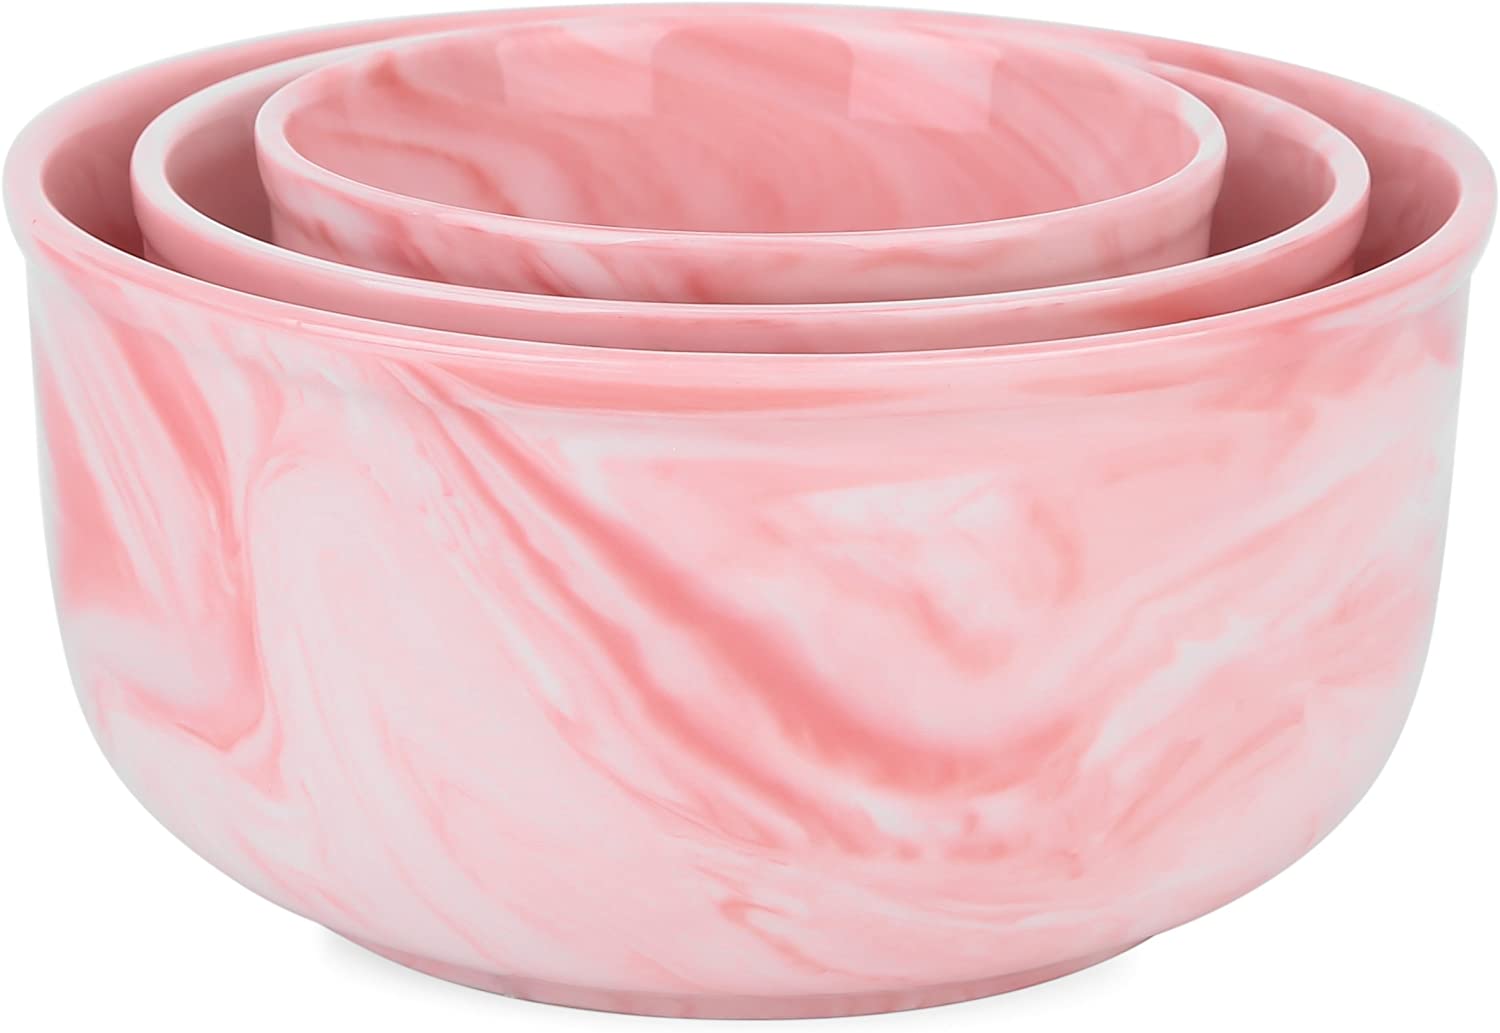 Vancasso Set of 3 porcelain bowls in 3 sizes, soup bowls, cereal bowls, snack bowls, dip bowls, diameter 15 / 12 / 9.4 cm, spiral decoration, pink